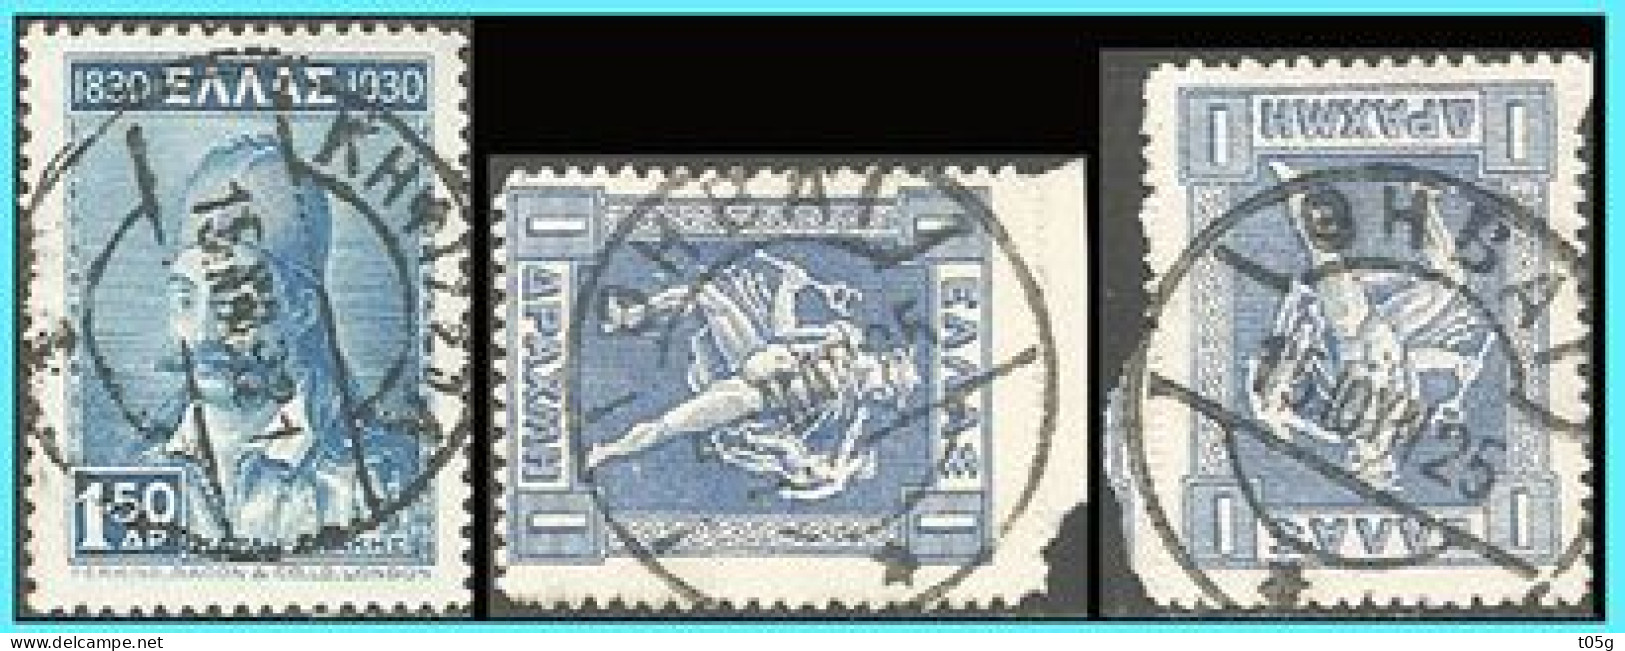 GREECE-GRECE- HELLAS 1913: Canc. (ΚΗΦΙΣΙΑ ΝΟΕ 21) (ΘΗΒΑΙ 1 ΙΟΥΝ 25) On 1drx Lithographic  used - Gebraucht